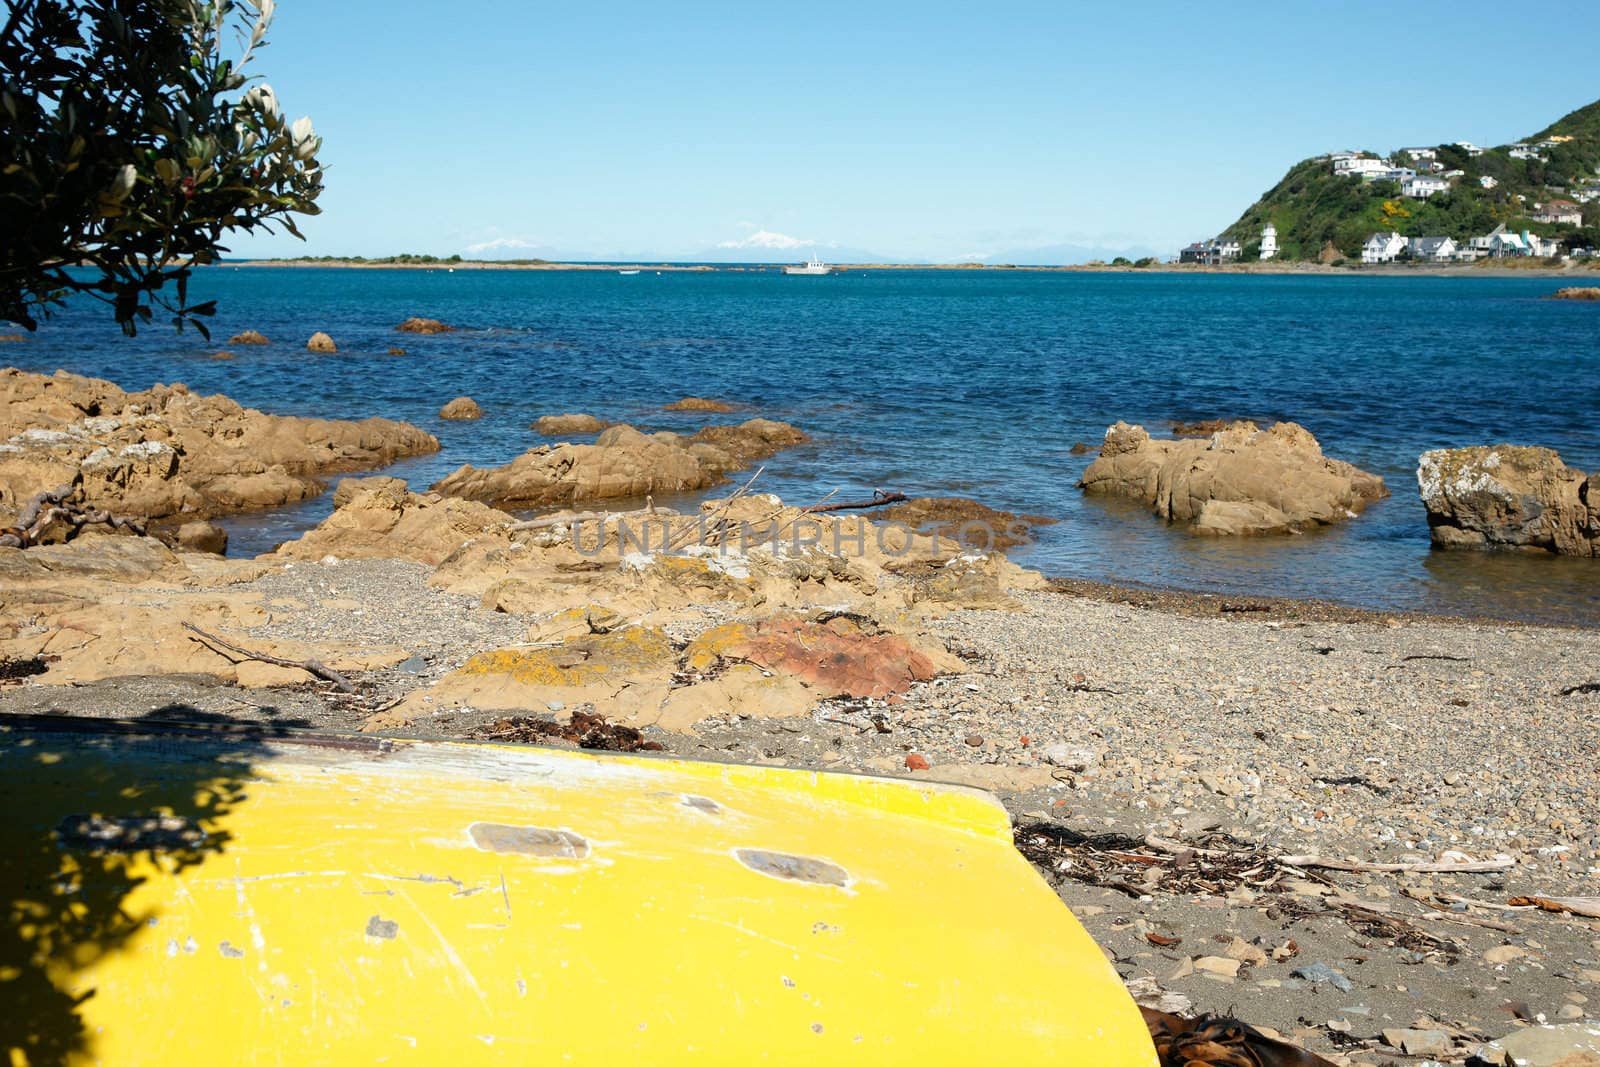 Beach scene with upturned yellow boat at Island Bay, Wellington, New Zealand.